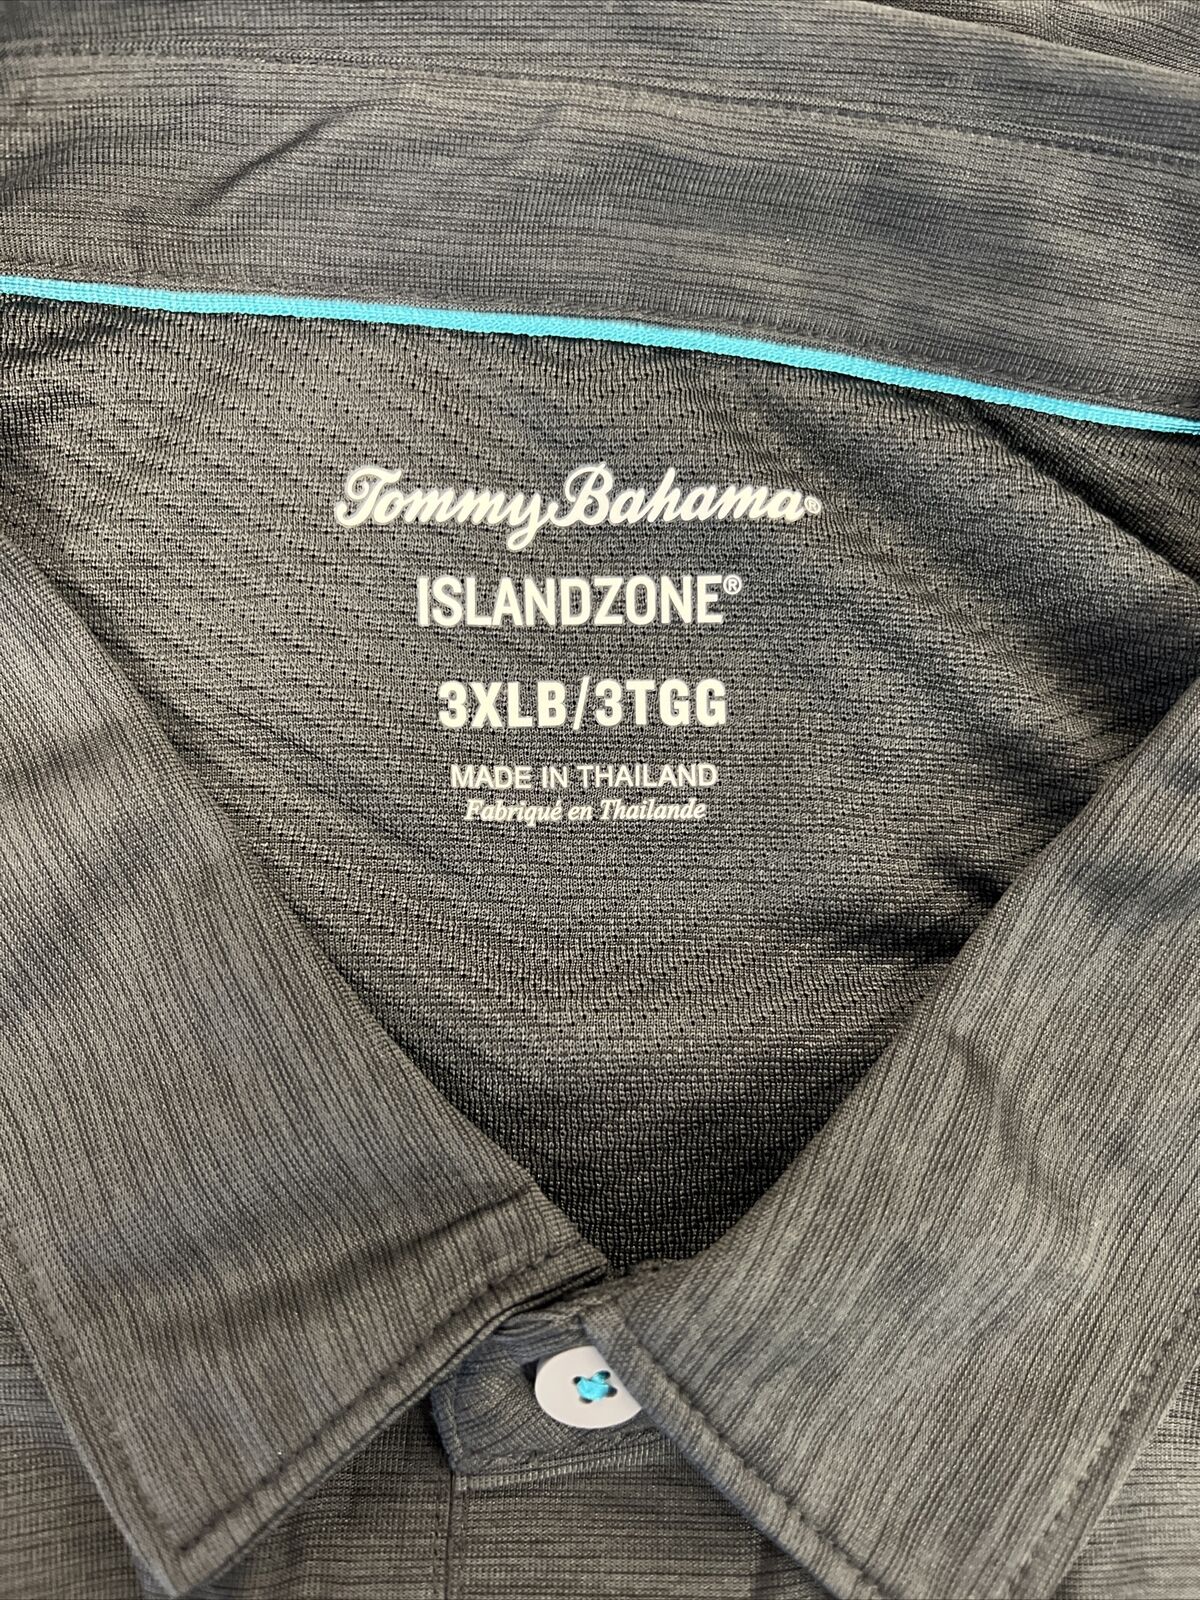 Tommy Bahama Men's Charcoal Gray Island Zone Mesh Polo Shirt - Big 3XLB